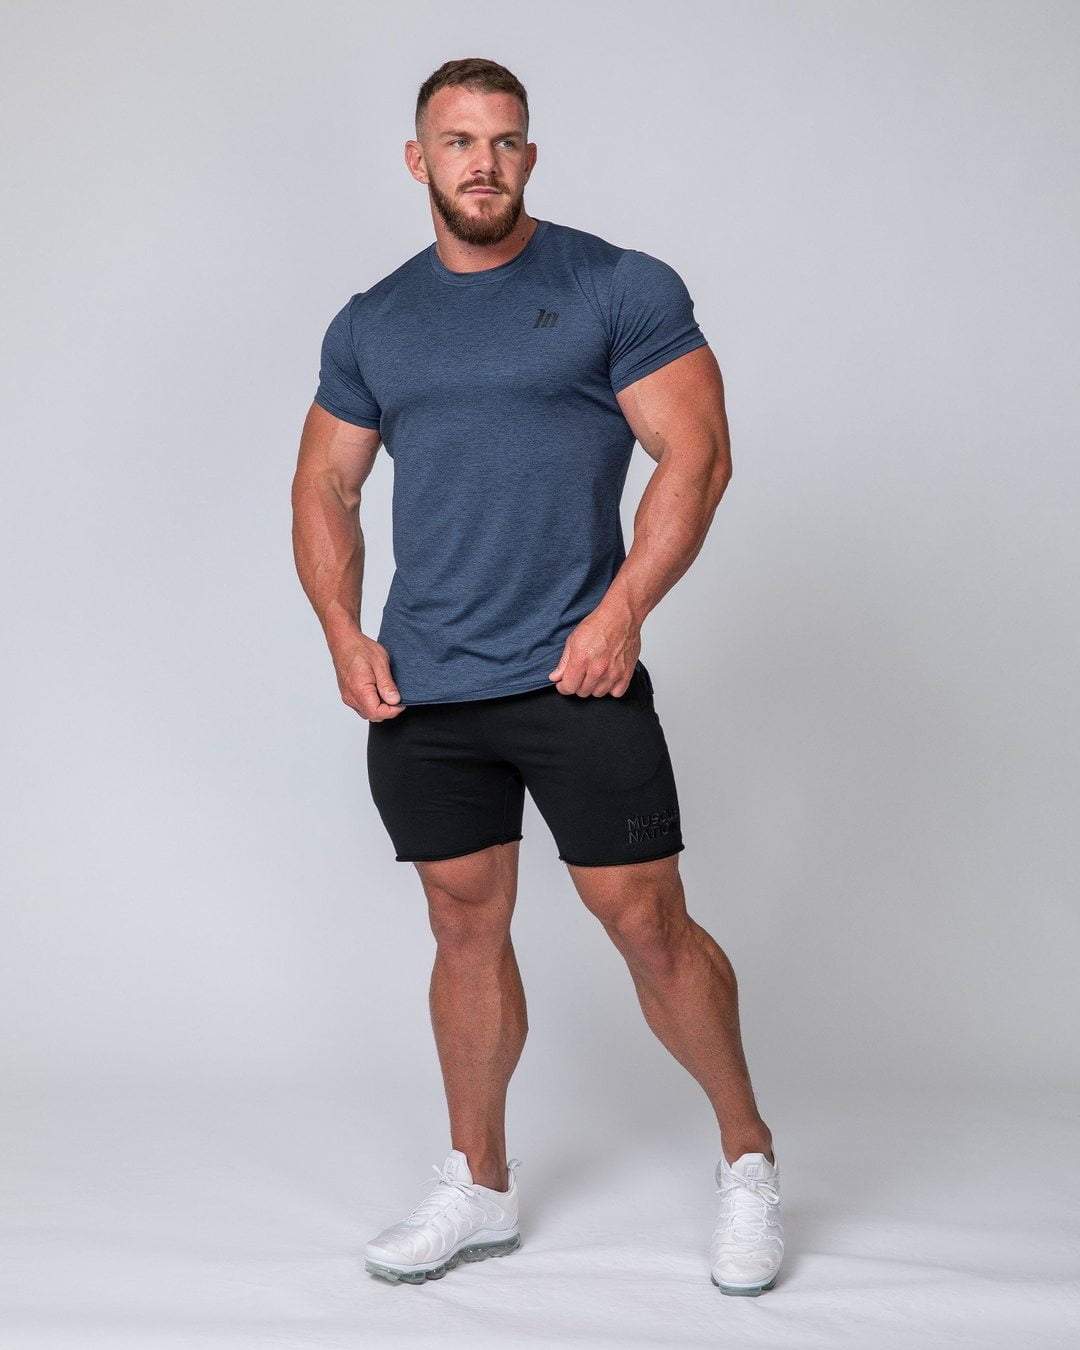 musclenation ClimaFlex Tshirt - Navy Marl